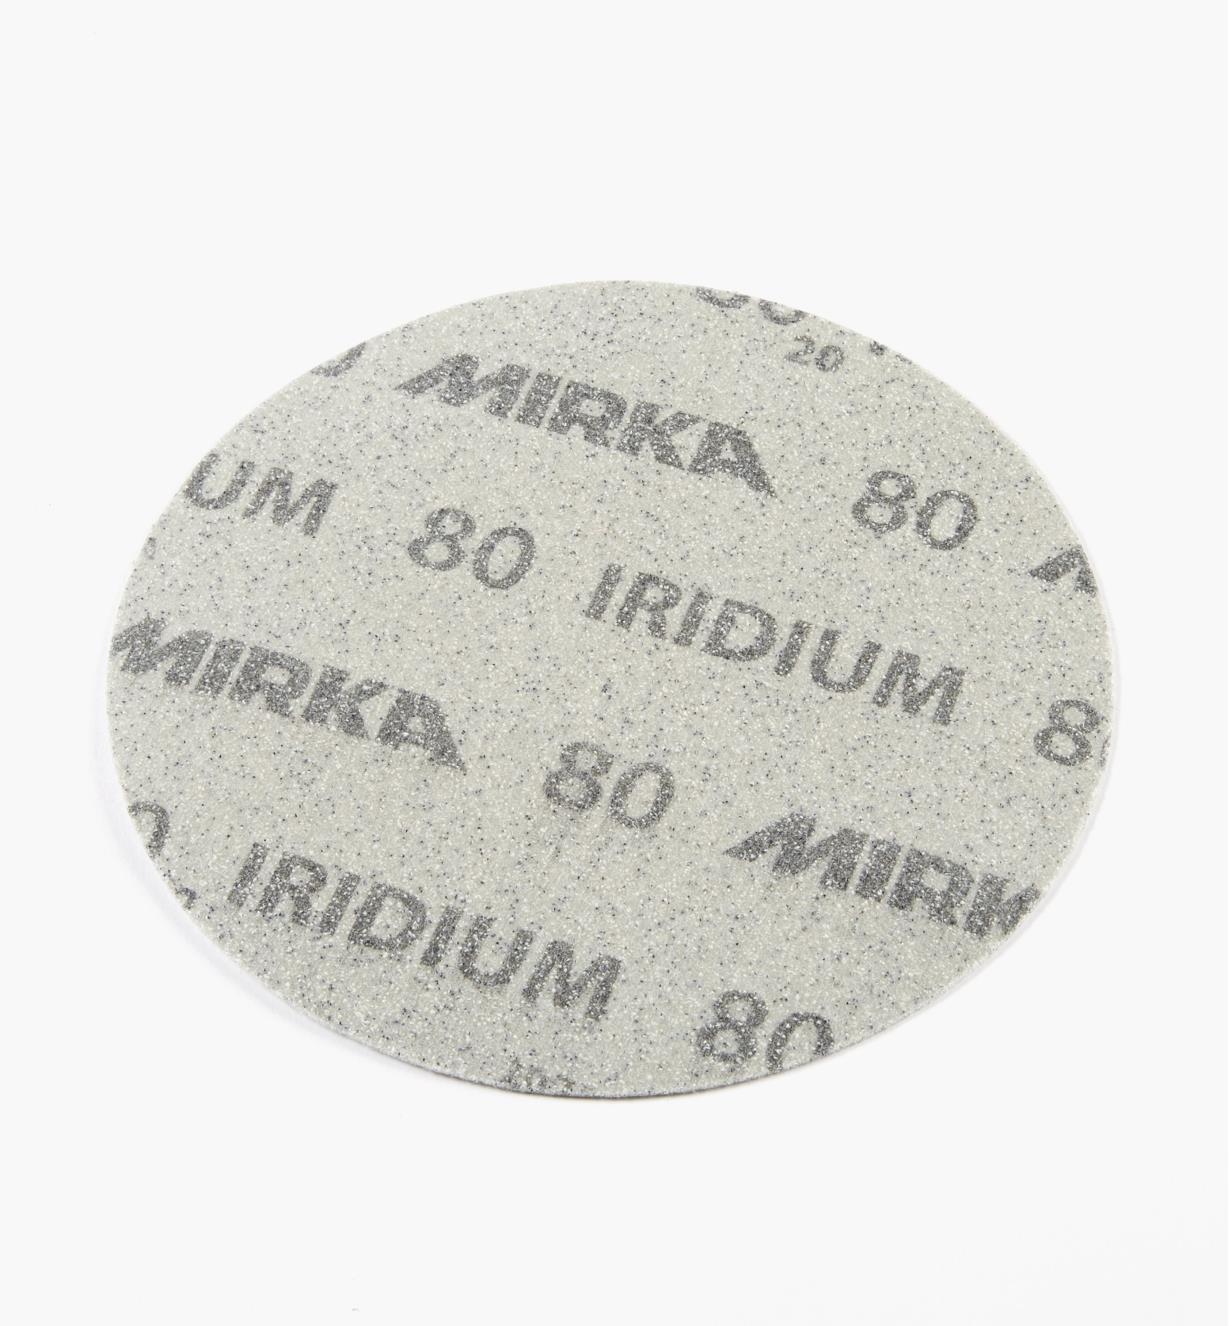 08K1741 - 80x 6" No-Hole Iridium Grip Disc, ea.